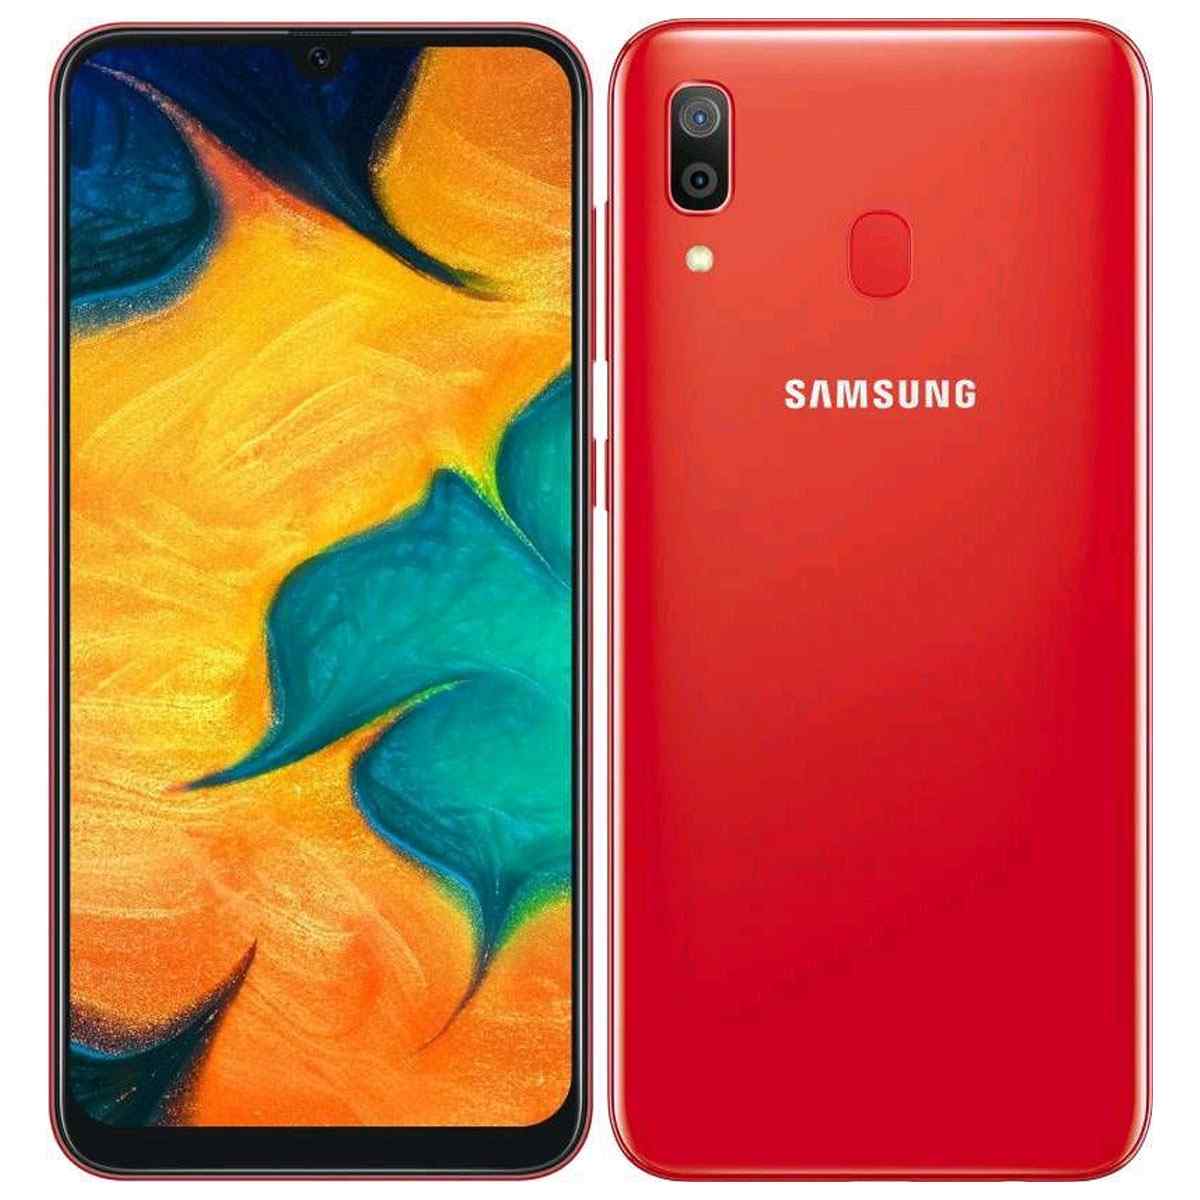 Самсунг а55 цвета. Samsung Galaxy a30. Samsung Galaxy a30 Red. Samsung Galaxy a30 2019. Самсунг галакси а 30.